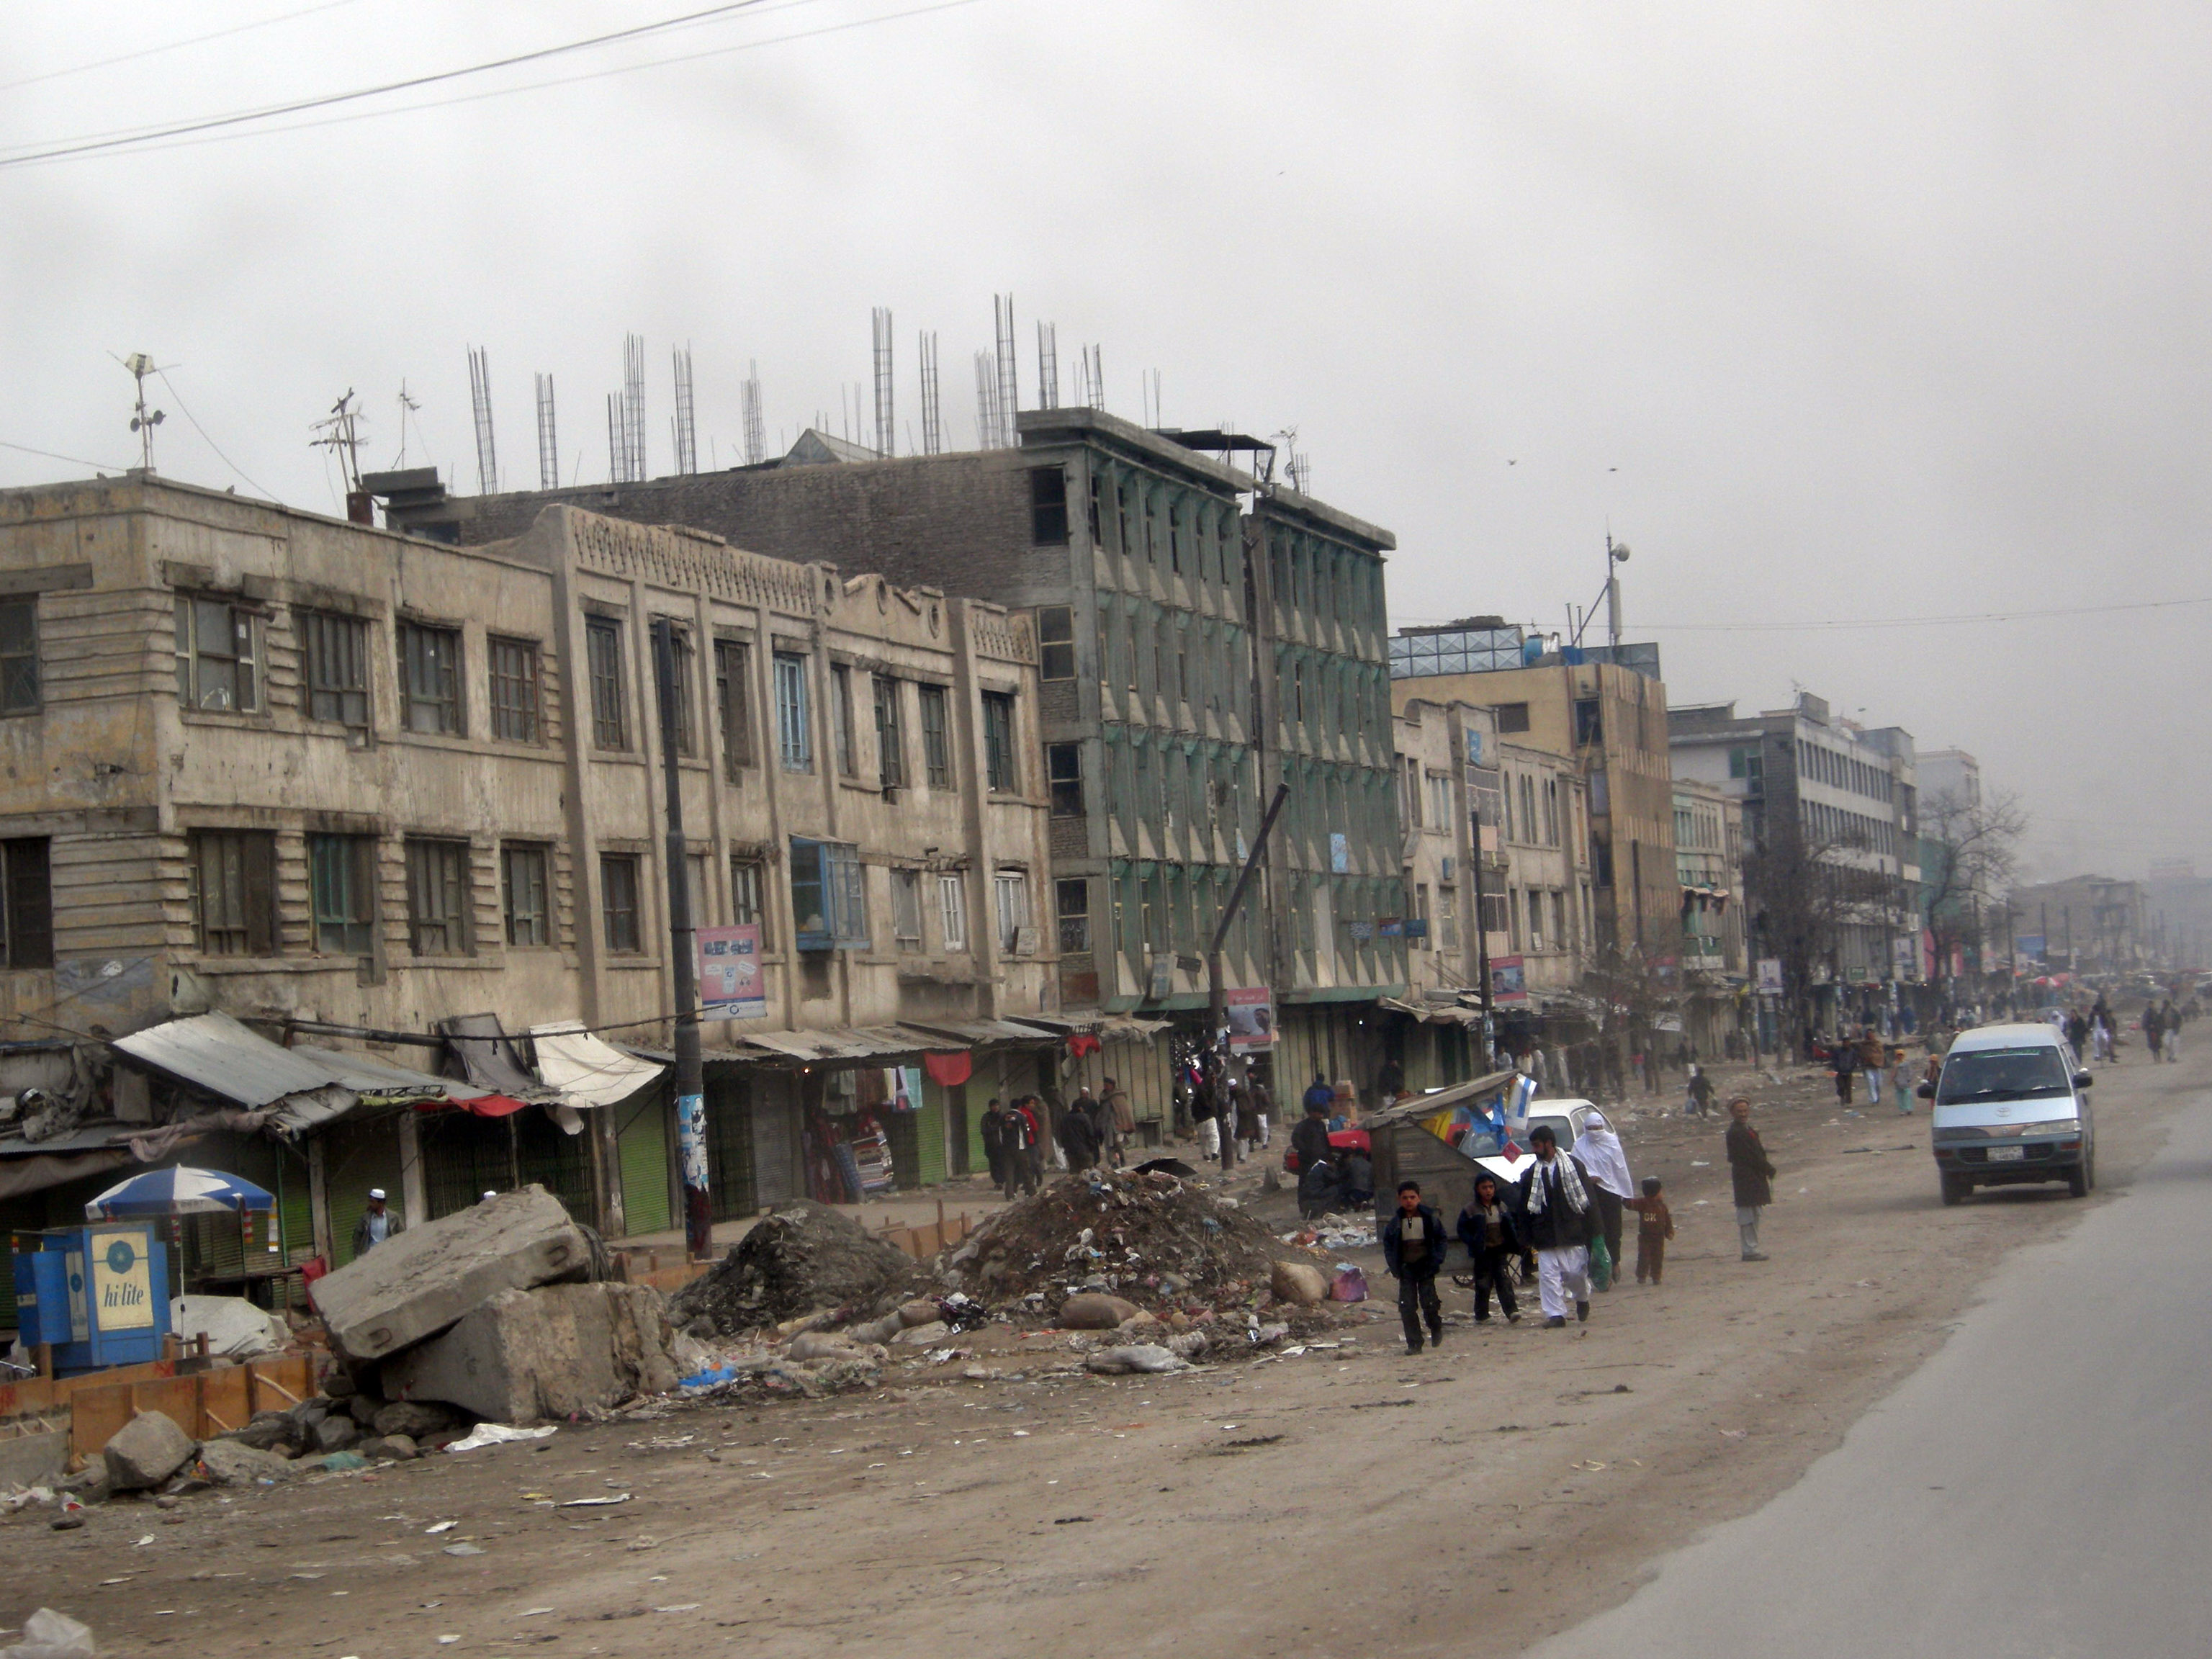 Downtown Kabul via Wikimedia Commons